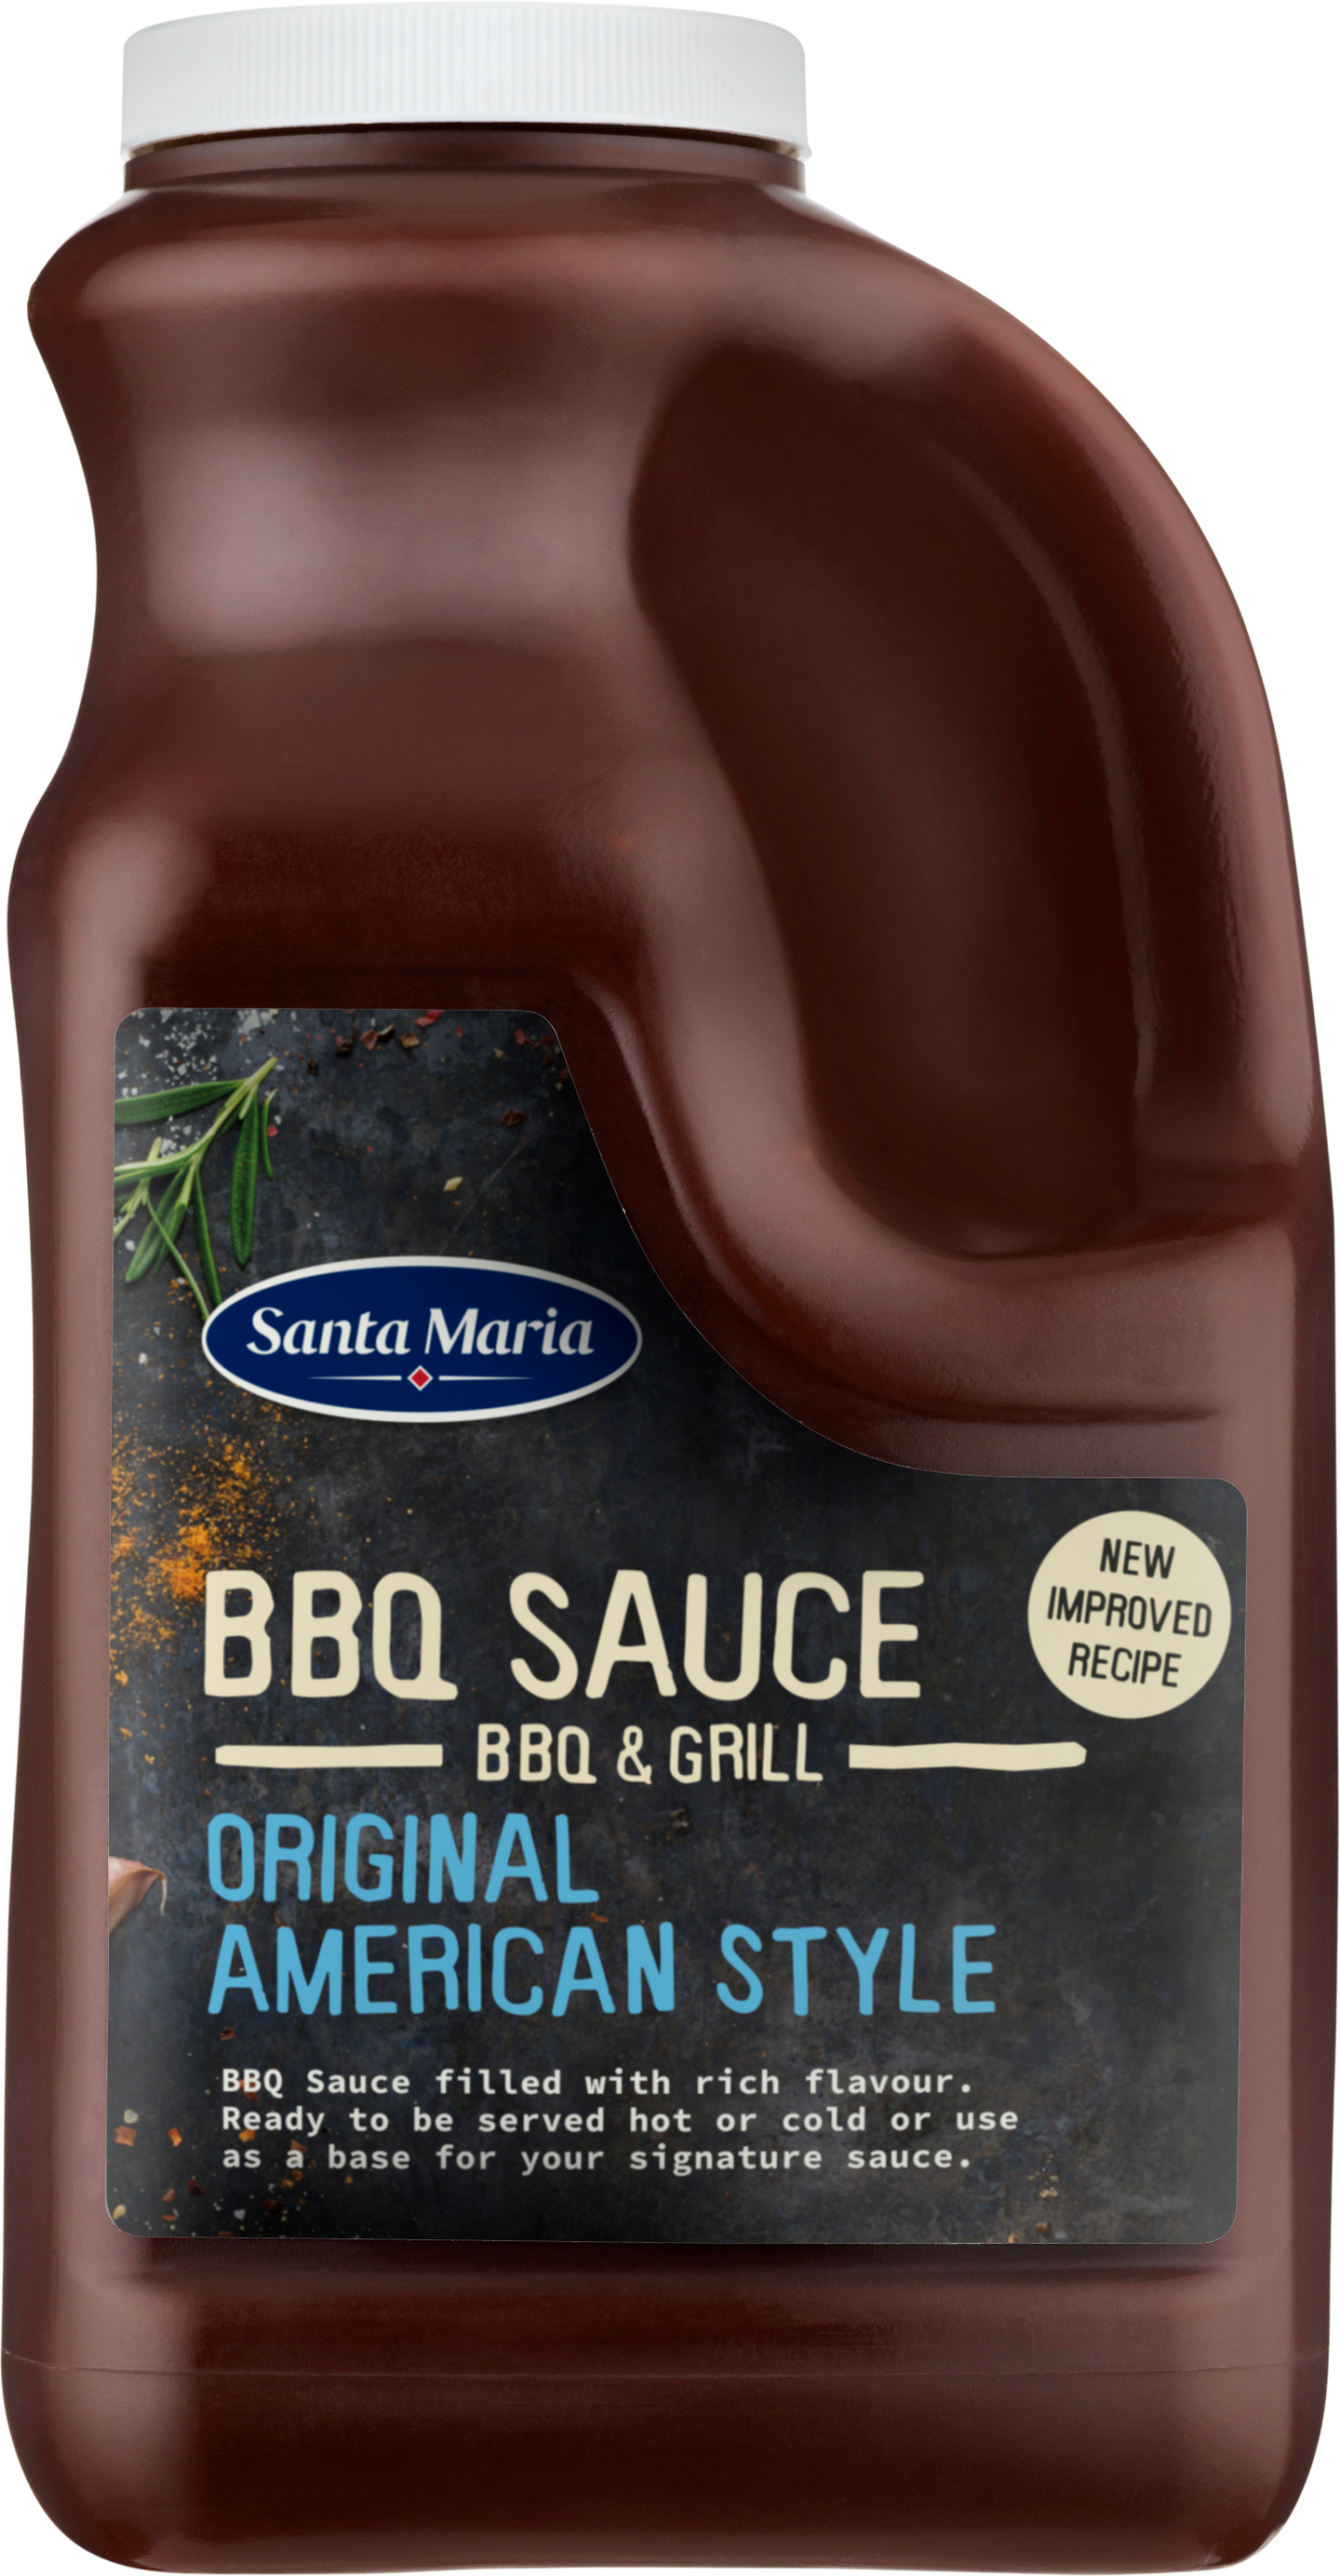 Santa Maria BBQ Sauce Original American Style 2575g